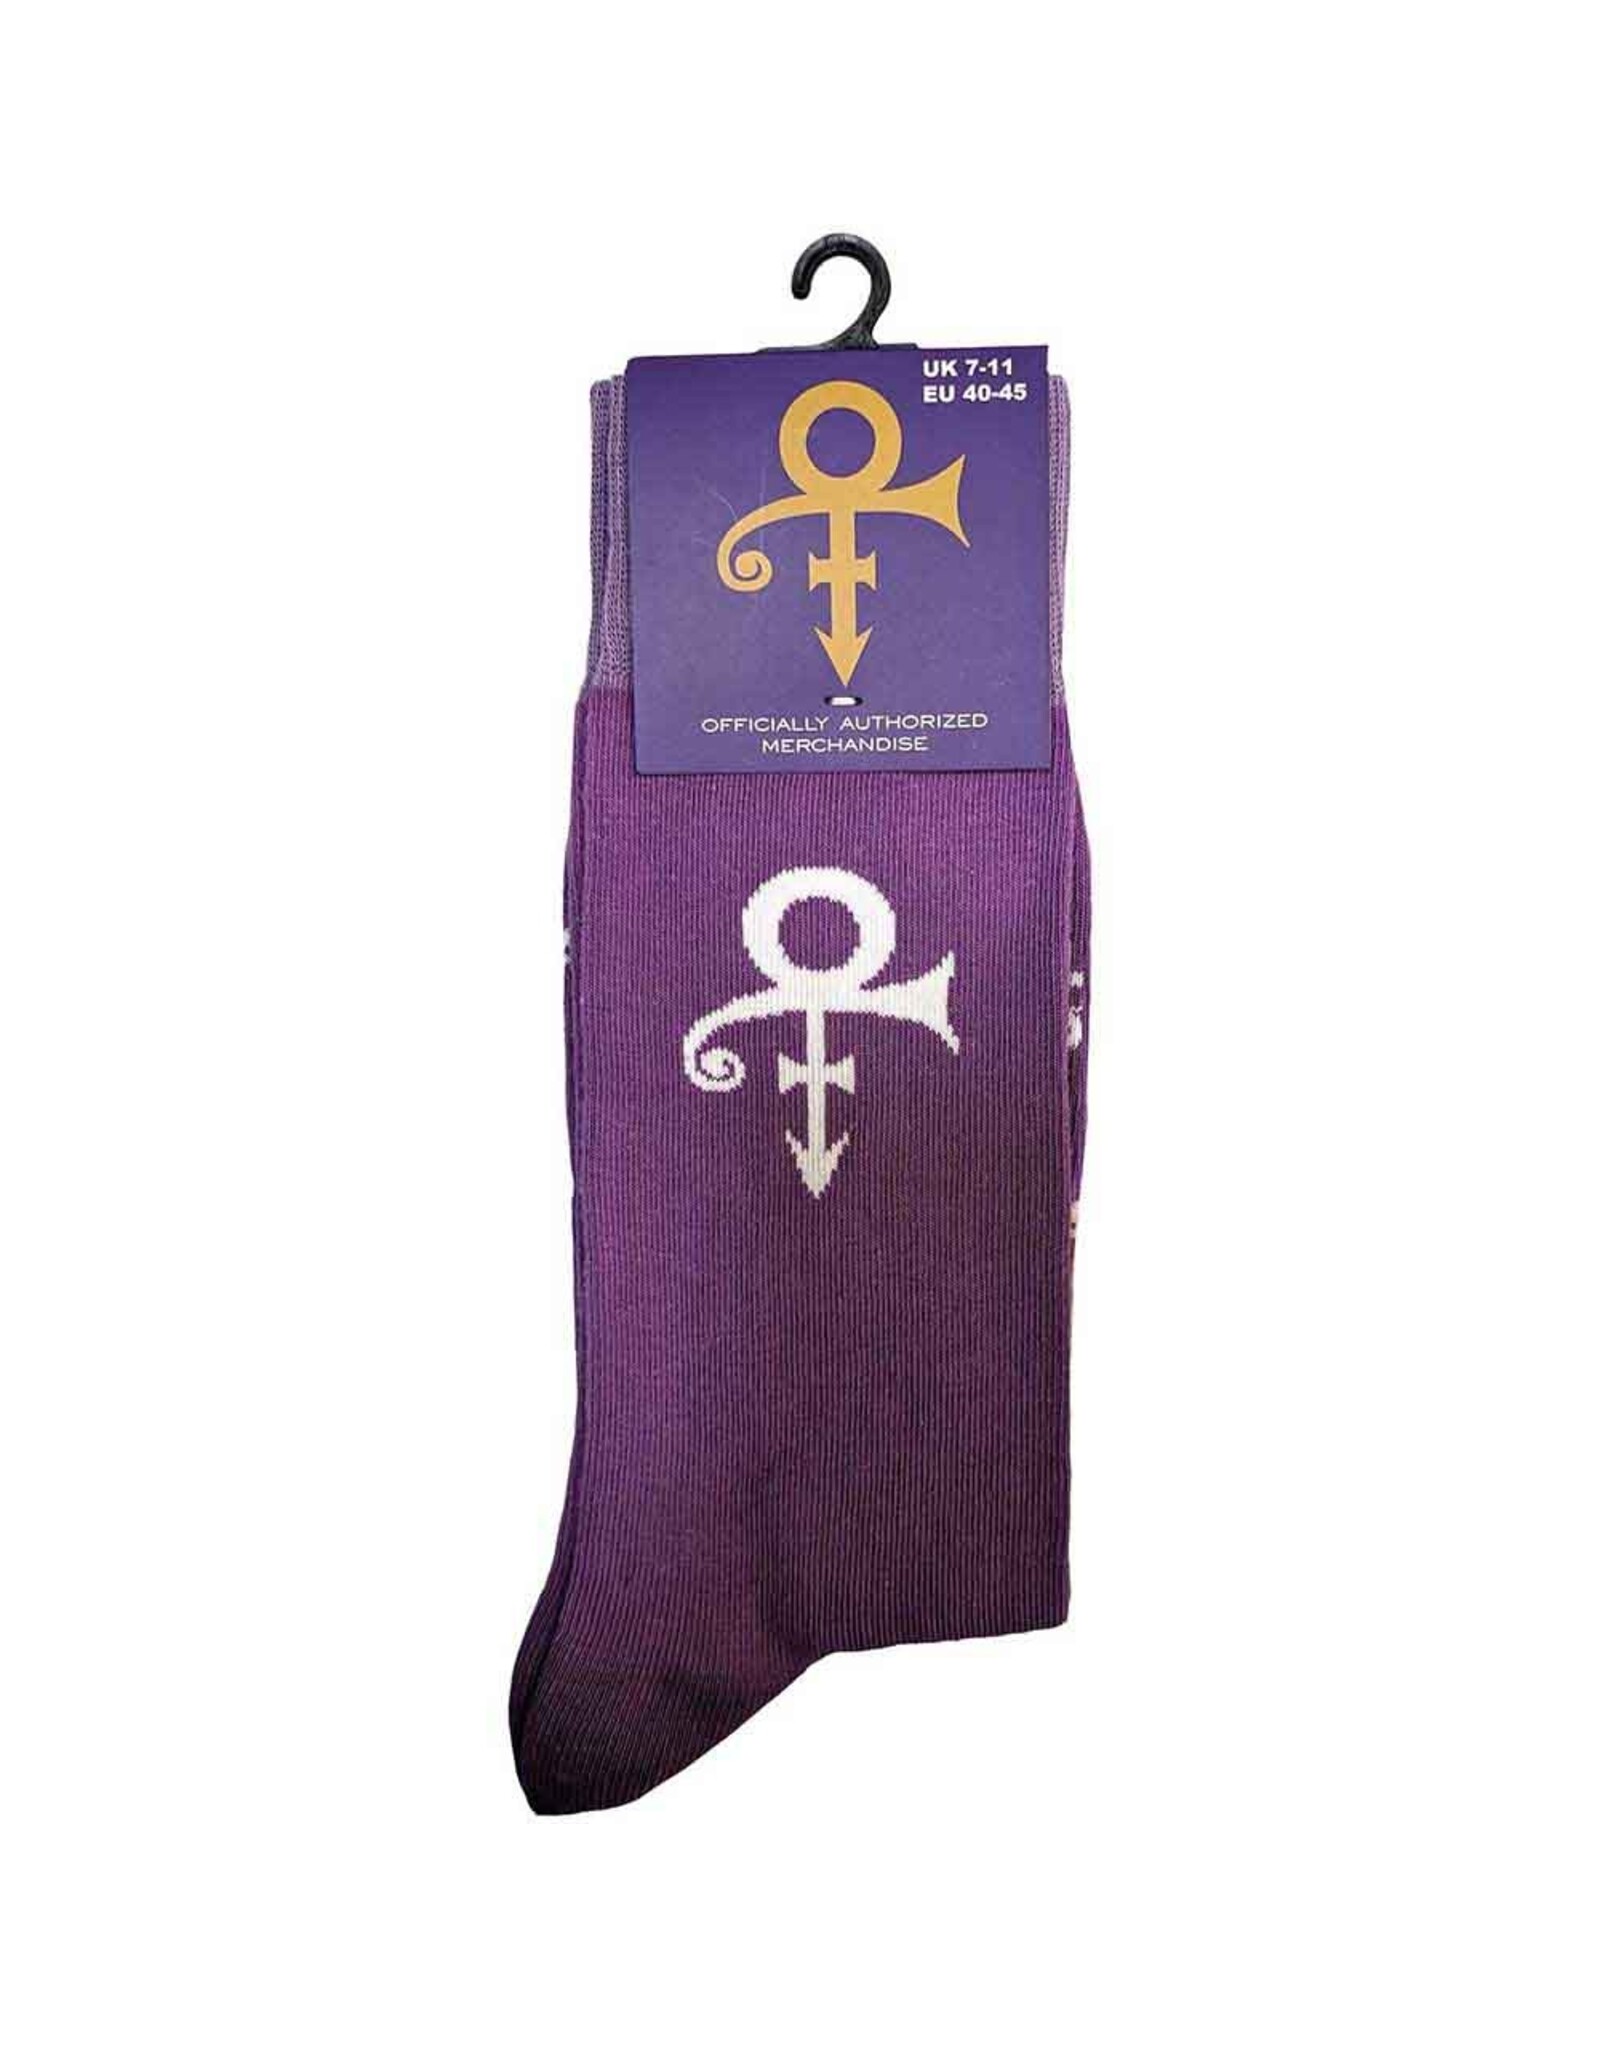 Prince / Love Symbol Socks